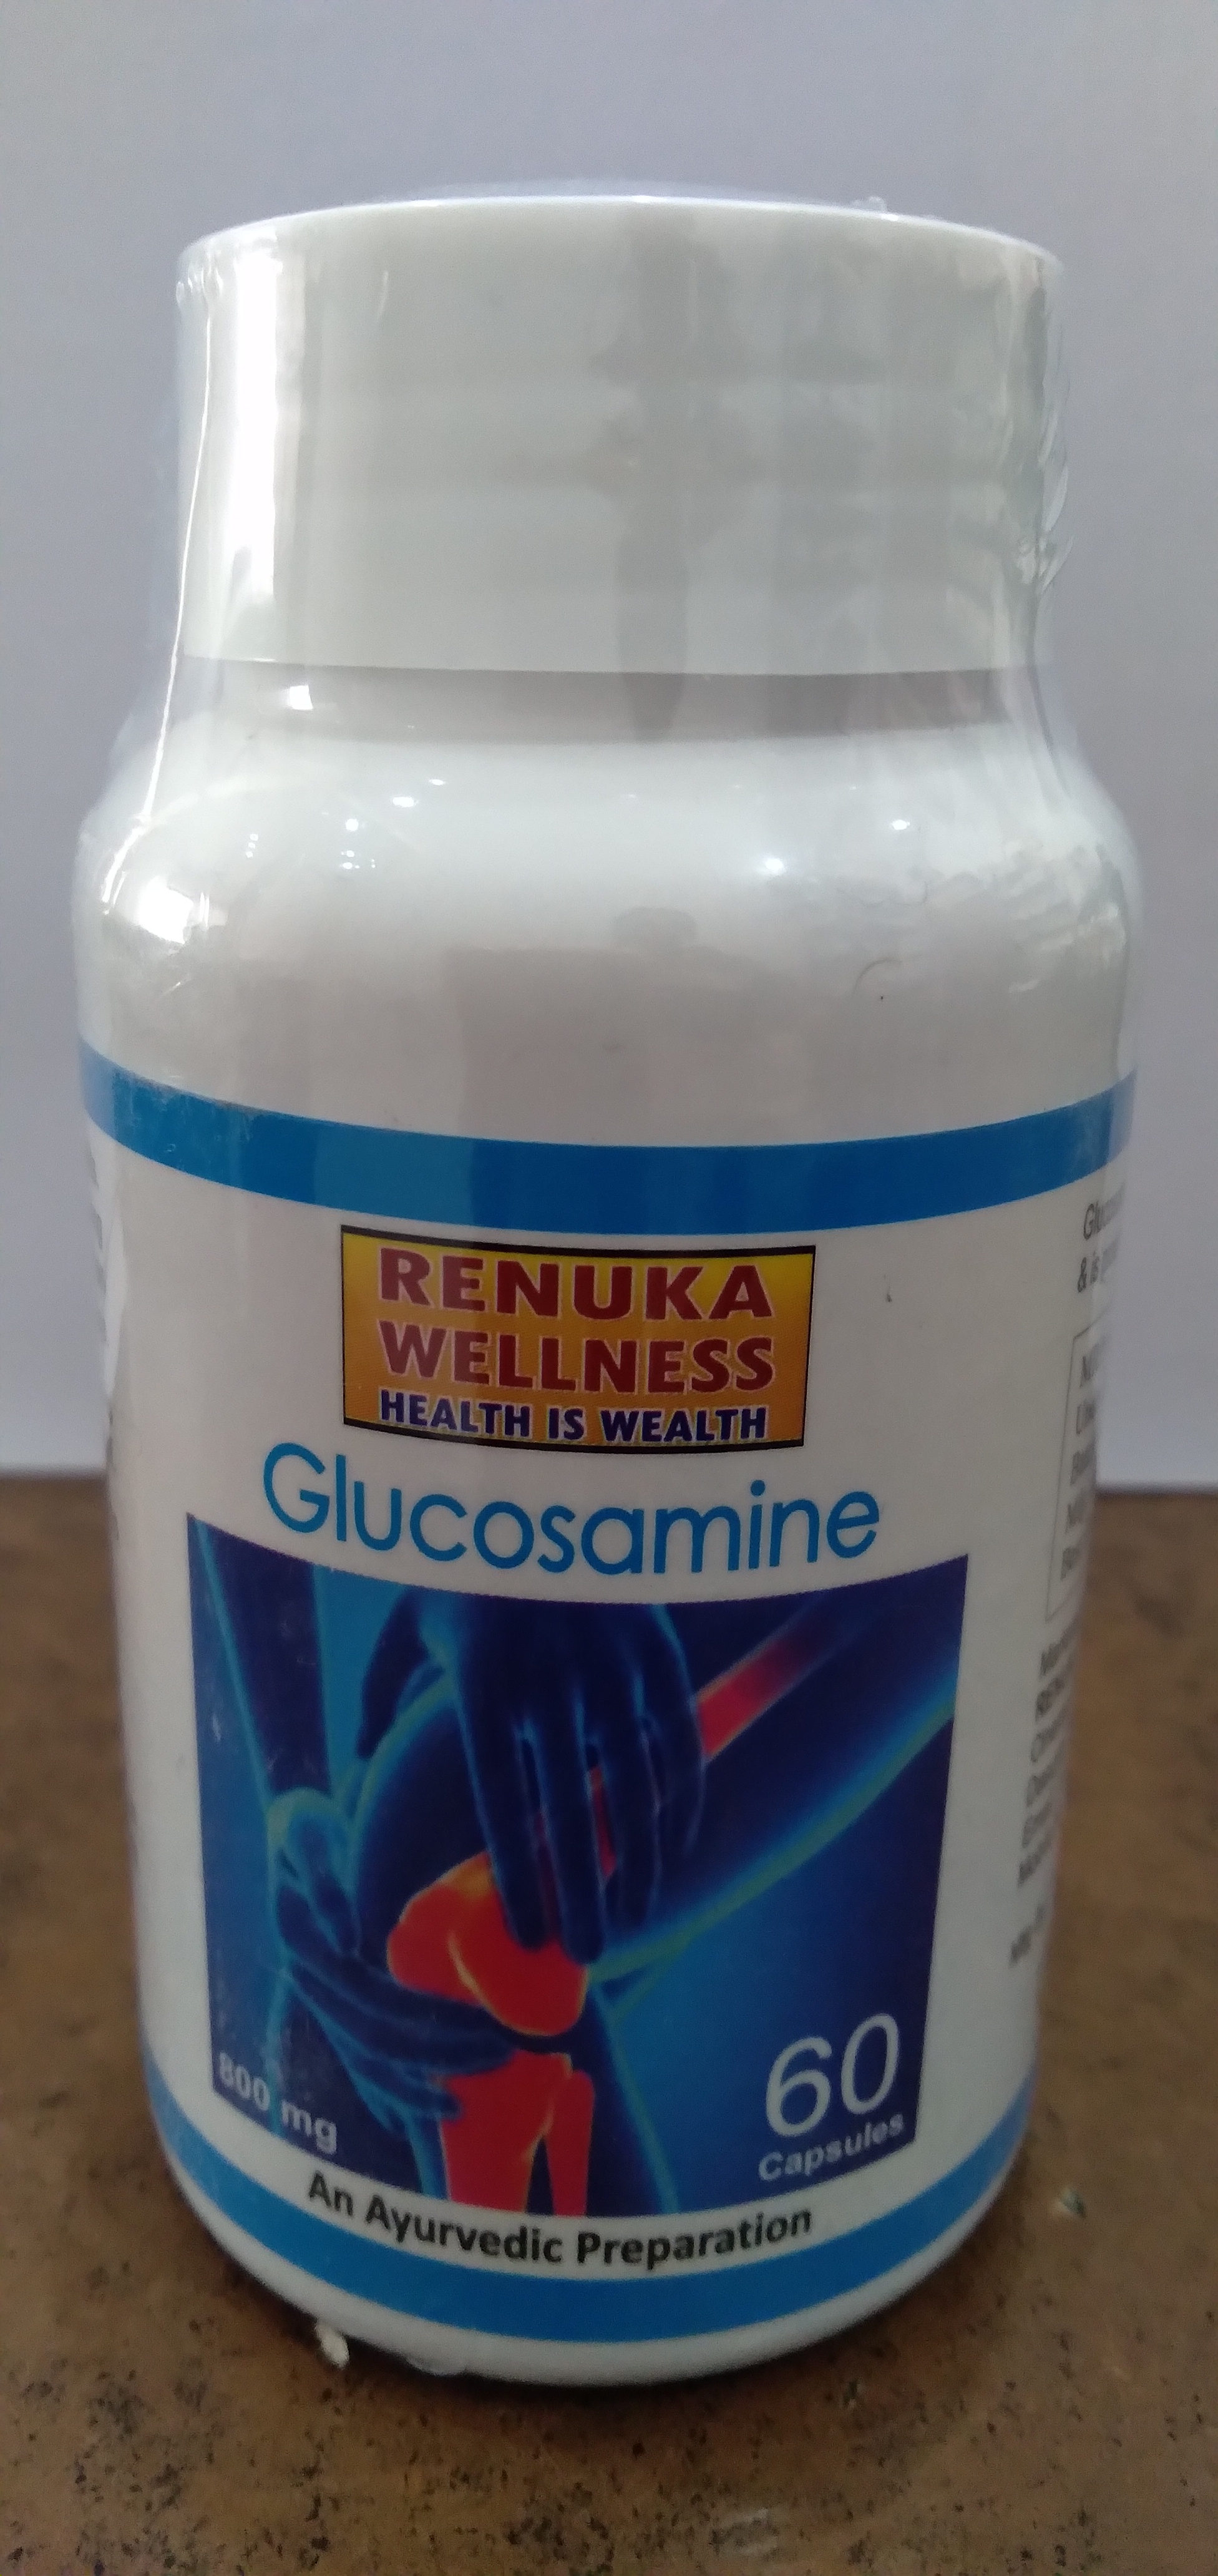 Buy Renuka Wellness GLUCOSAMINE CAPSULES- 800 mg at Best Price Online